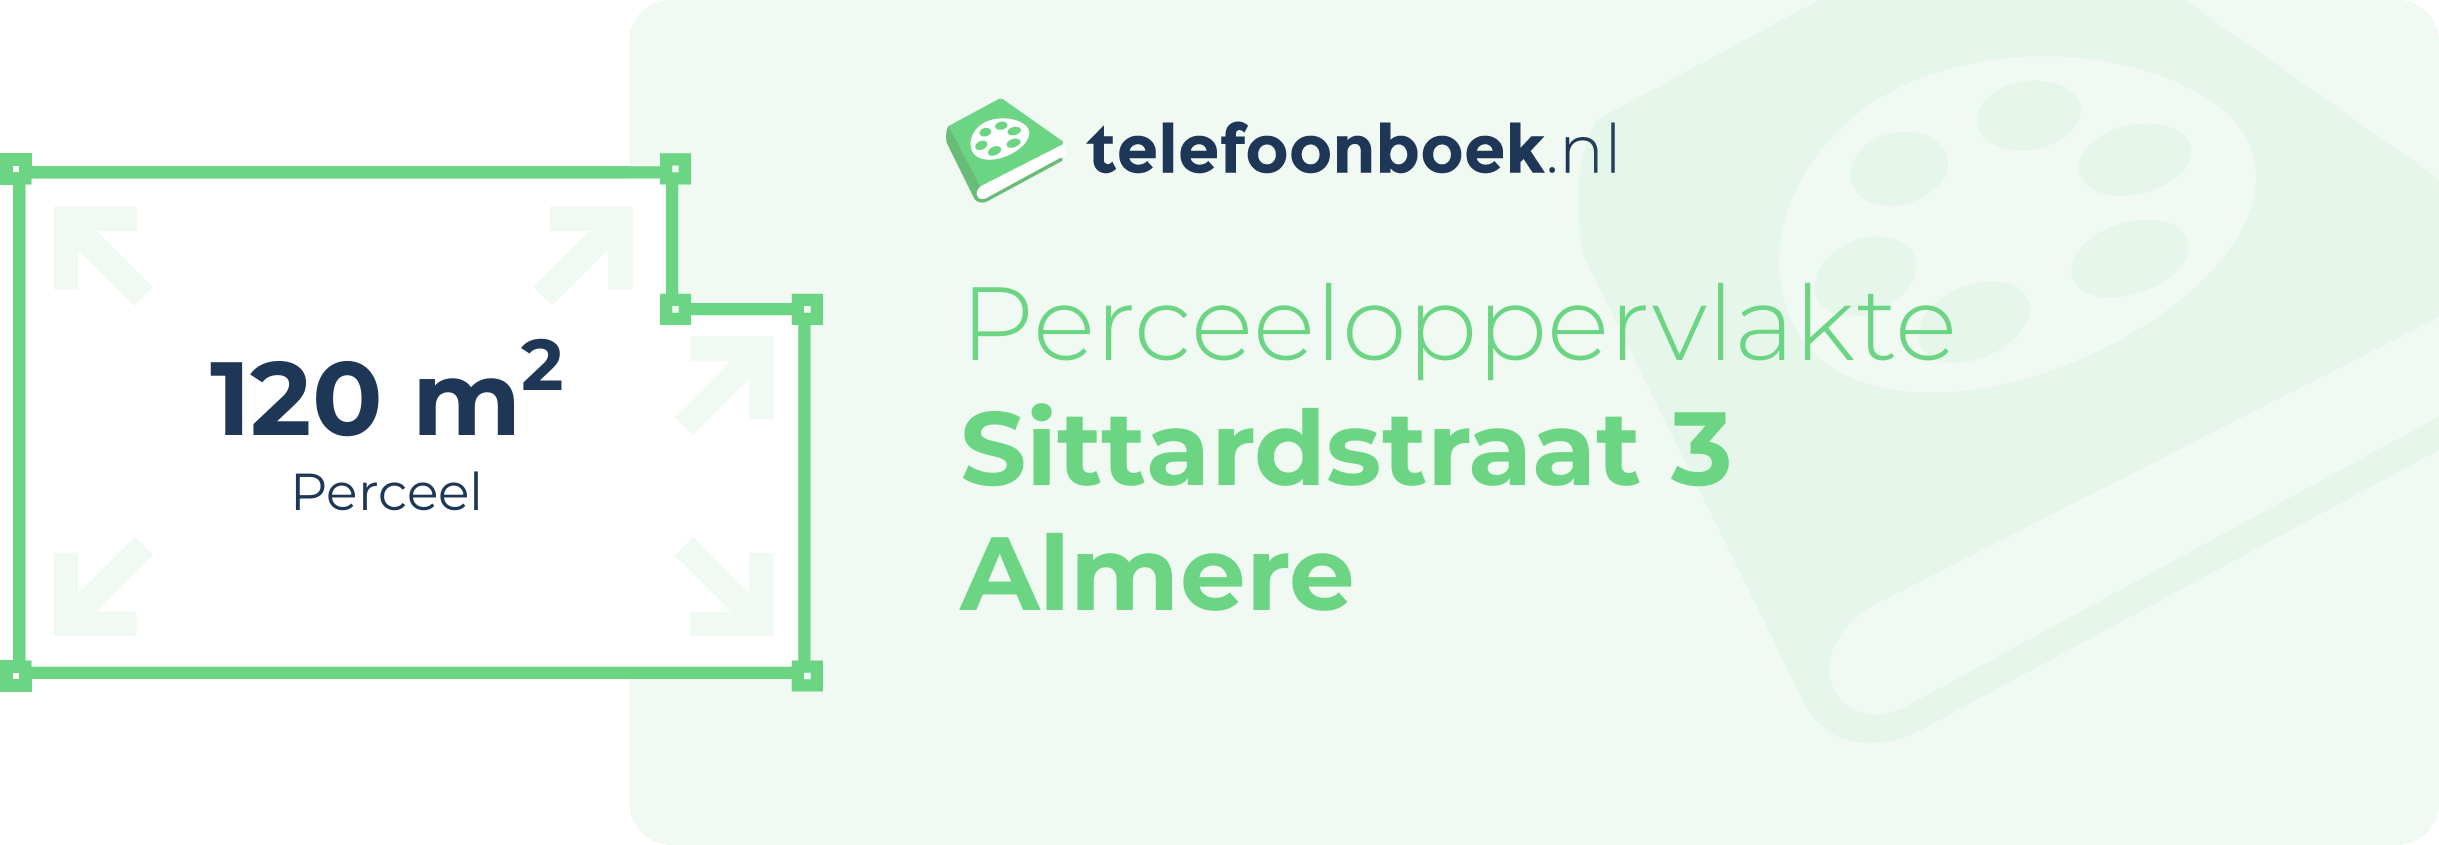 Perceeloppervlakte Sittardstraat 3 Almere